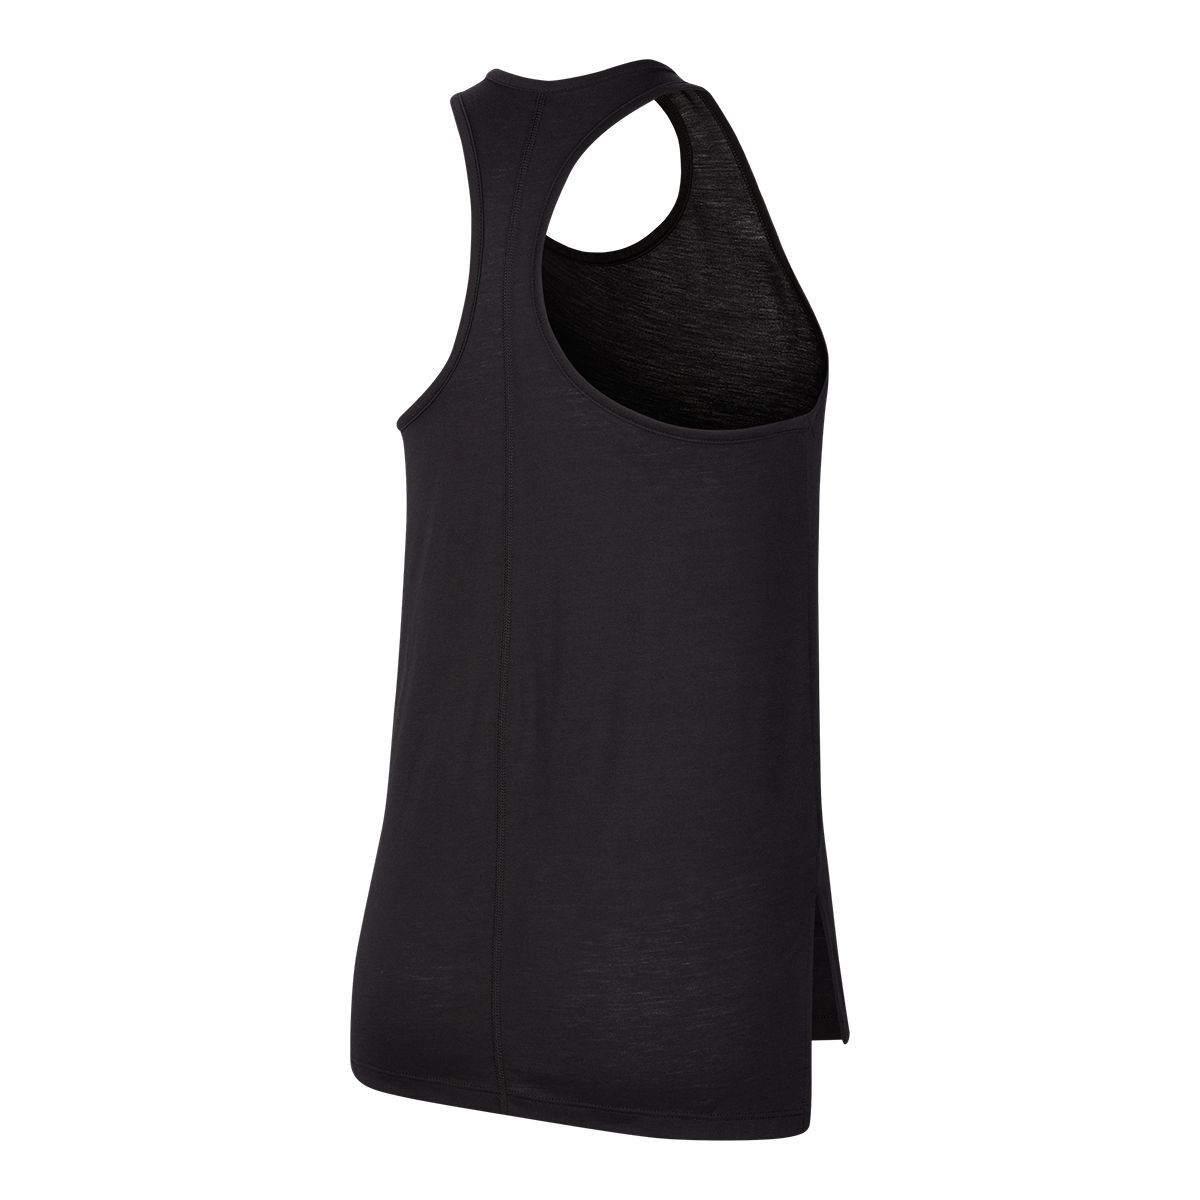 Nike Women's Yoga Layer Tank Top, Standard Fit, Sleeveless, Dri-FIT, Sports